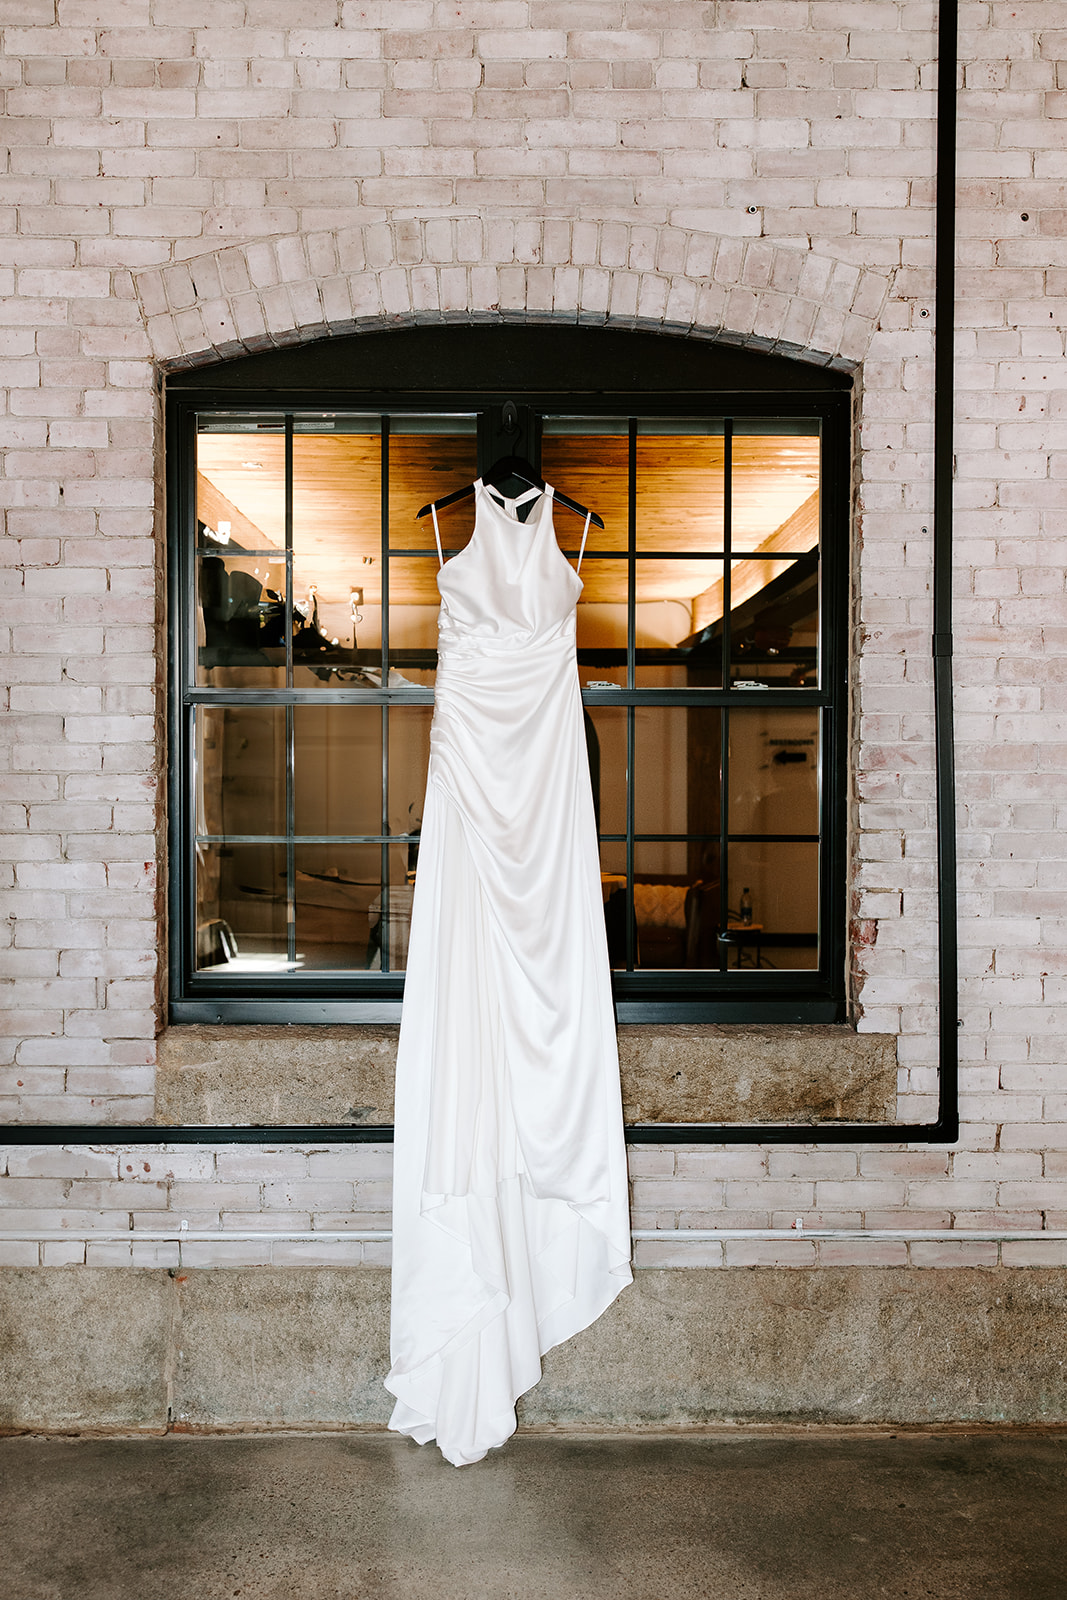 brides stunning wedding dress hangs at the dreamy factory wedding venue